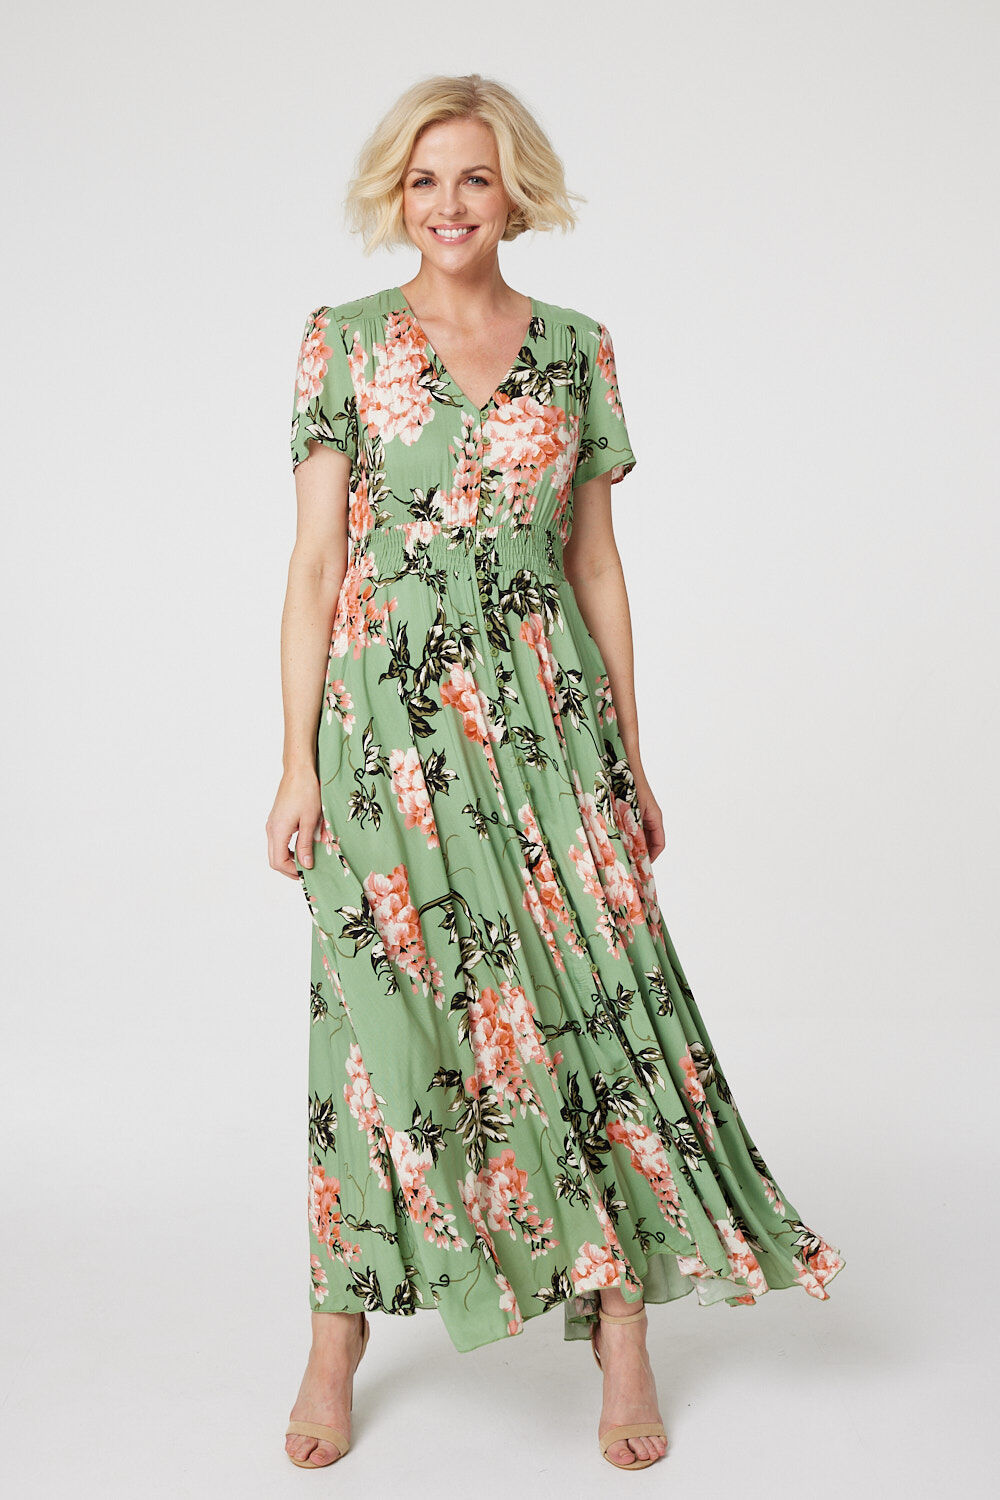 Izabel London Mint - Floral High Low Maxi Tea Dress, Size: 10